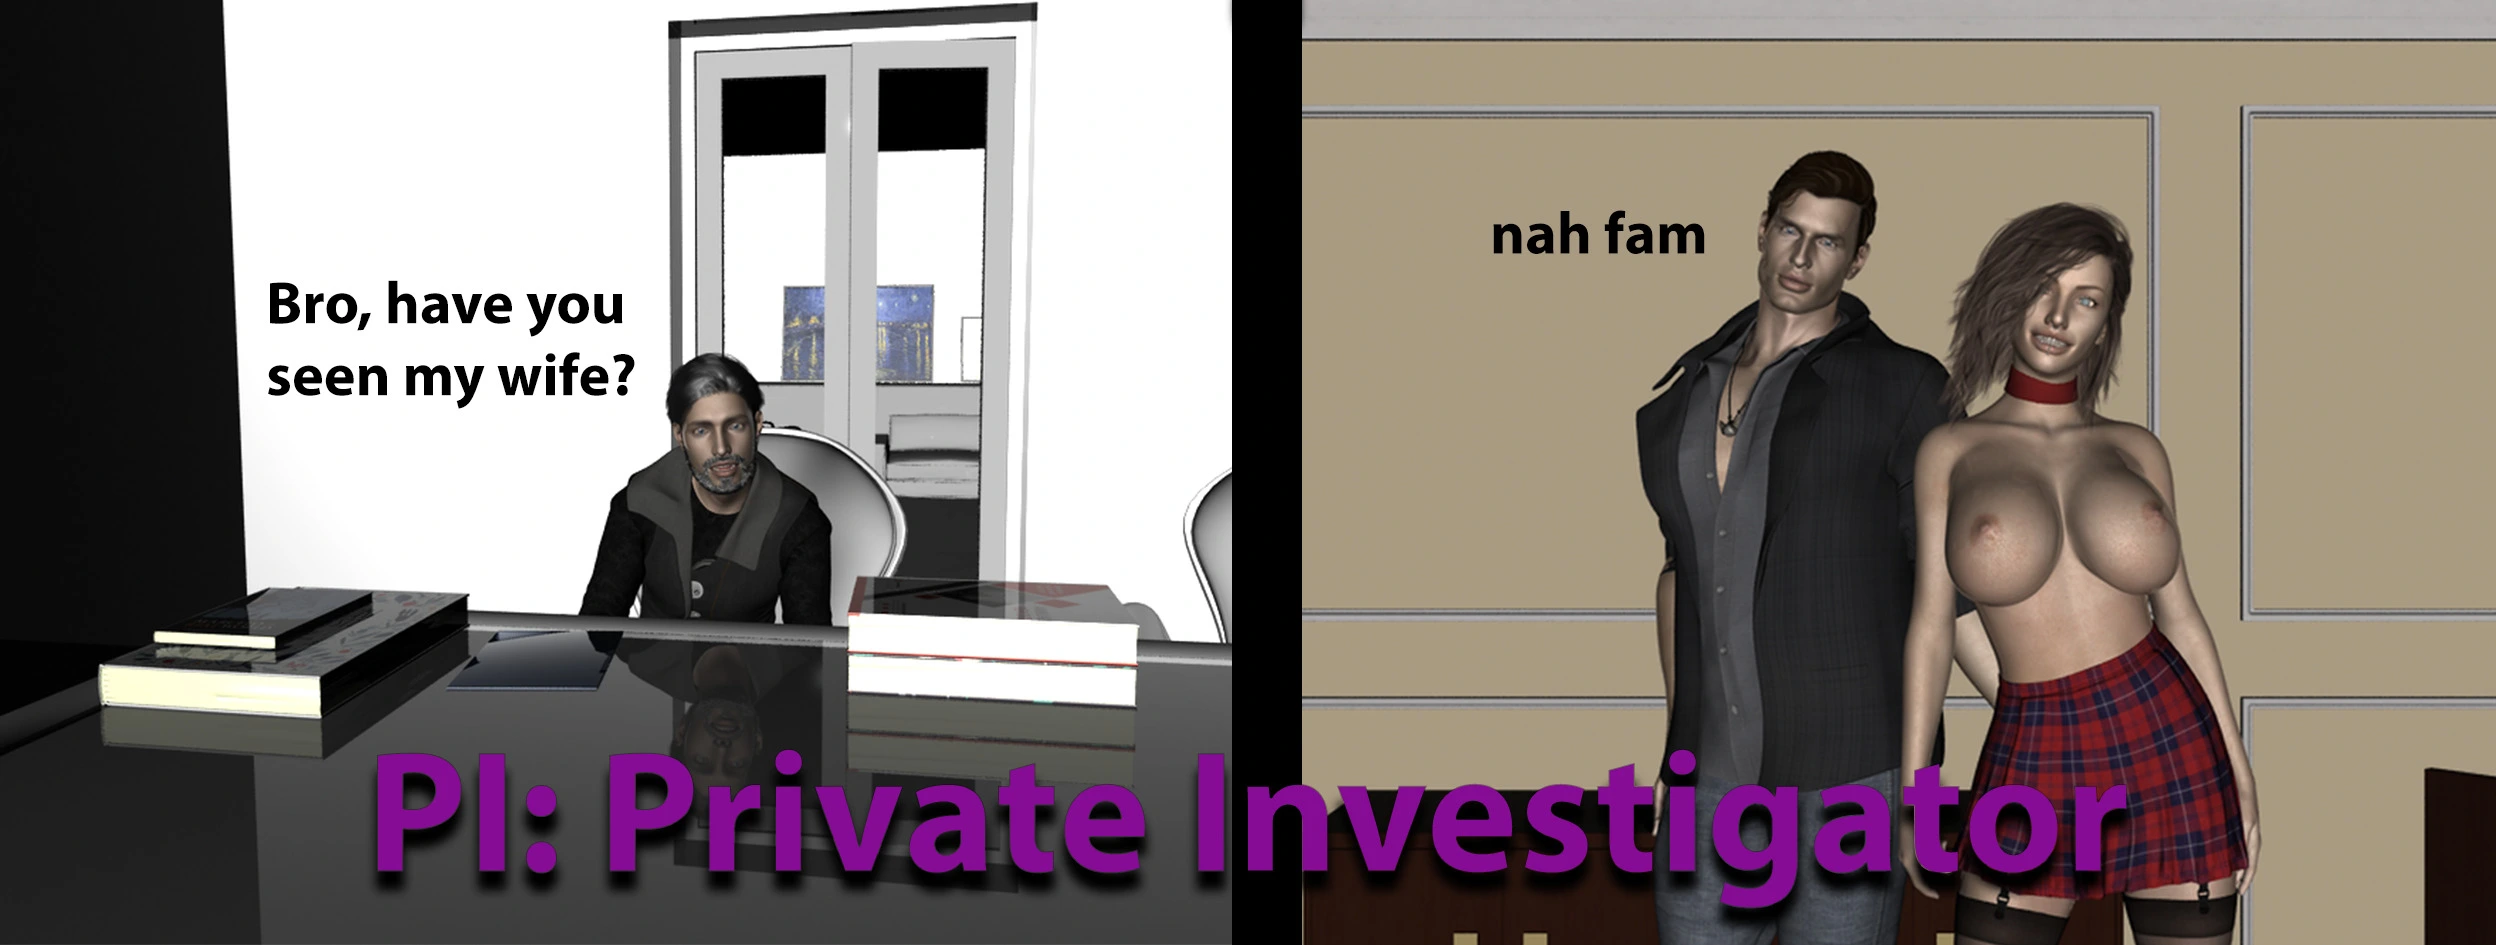 PI Private Investigator [v1.0] main image